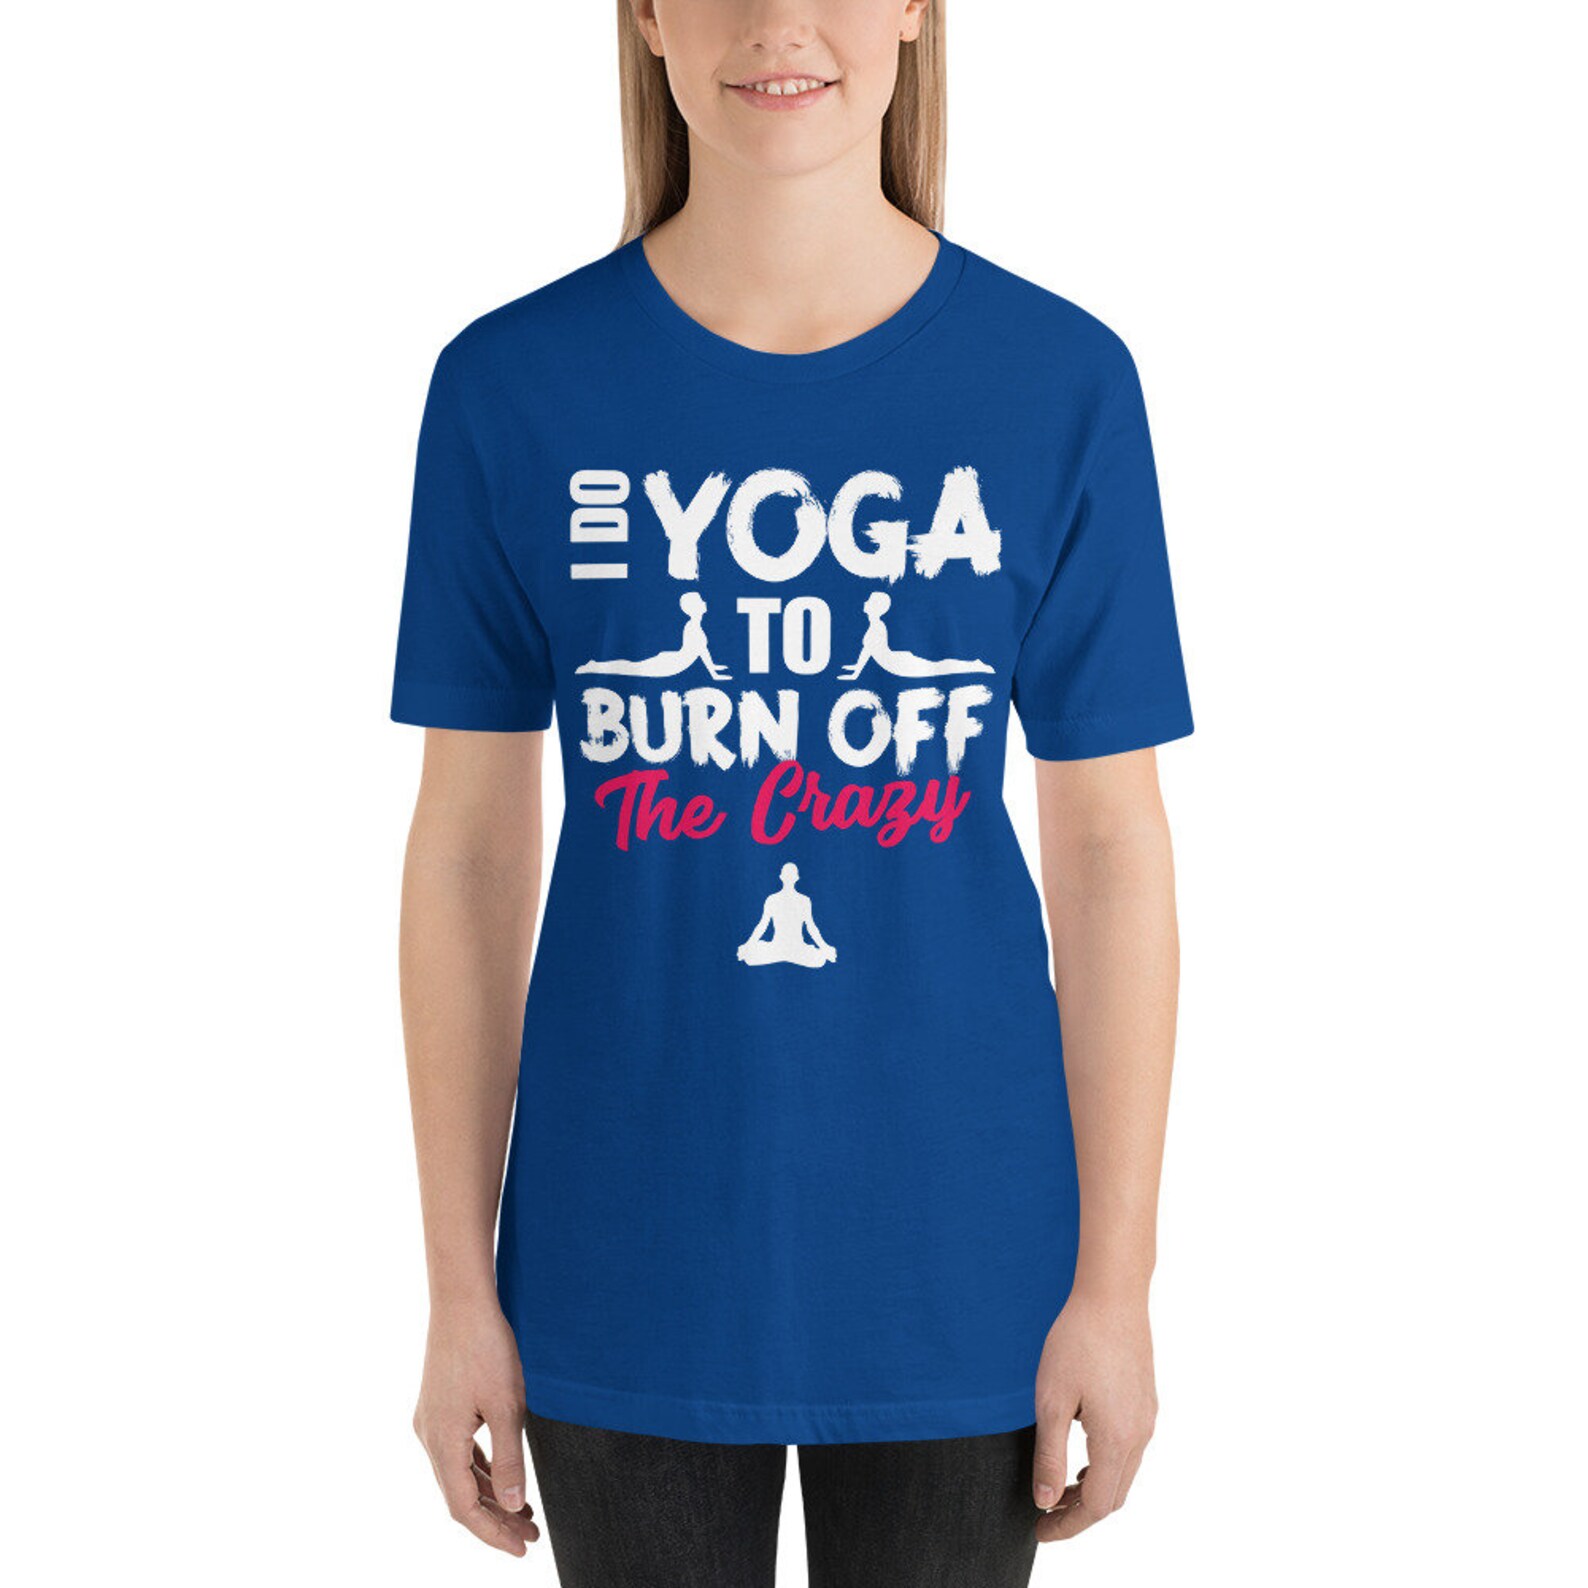 Funny Yoga Shirts Yoga Shirt Sayings Yoga Gifts I Do Yoga | Etsy